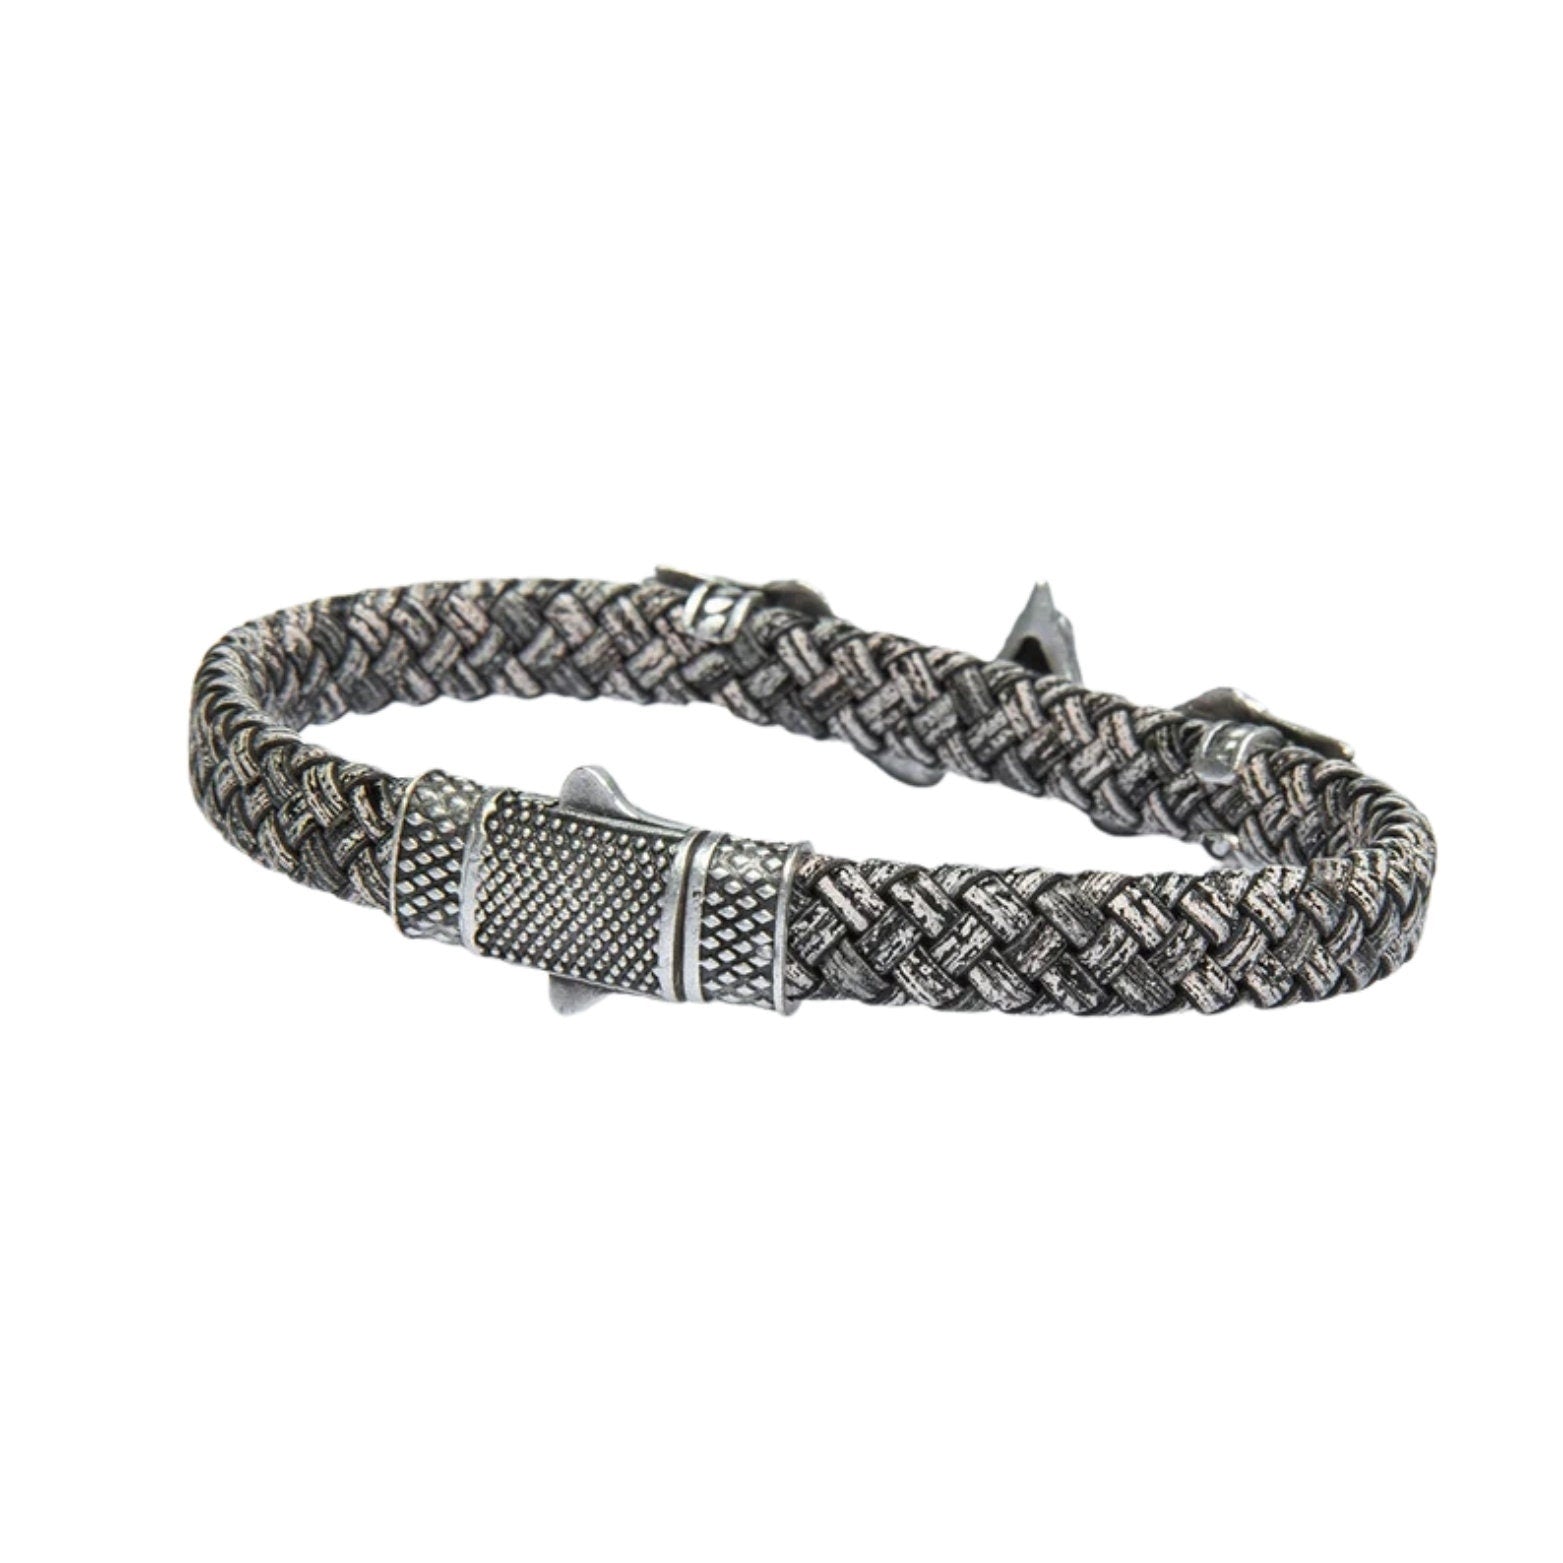 Mens bracelet gray cord bracelet for men with long bronze bar grey cord  bracelet for men gift for him mens jewelry stack bracelet  Shani  Adi  Jewelry